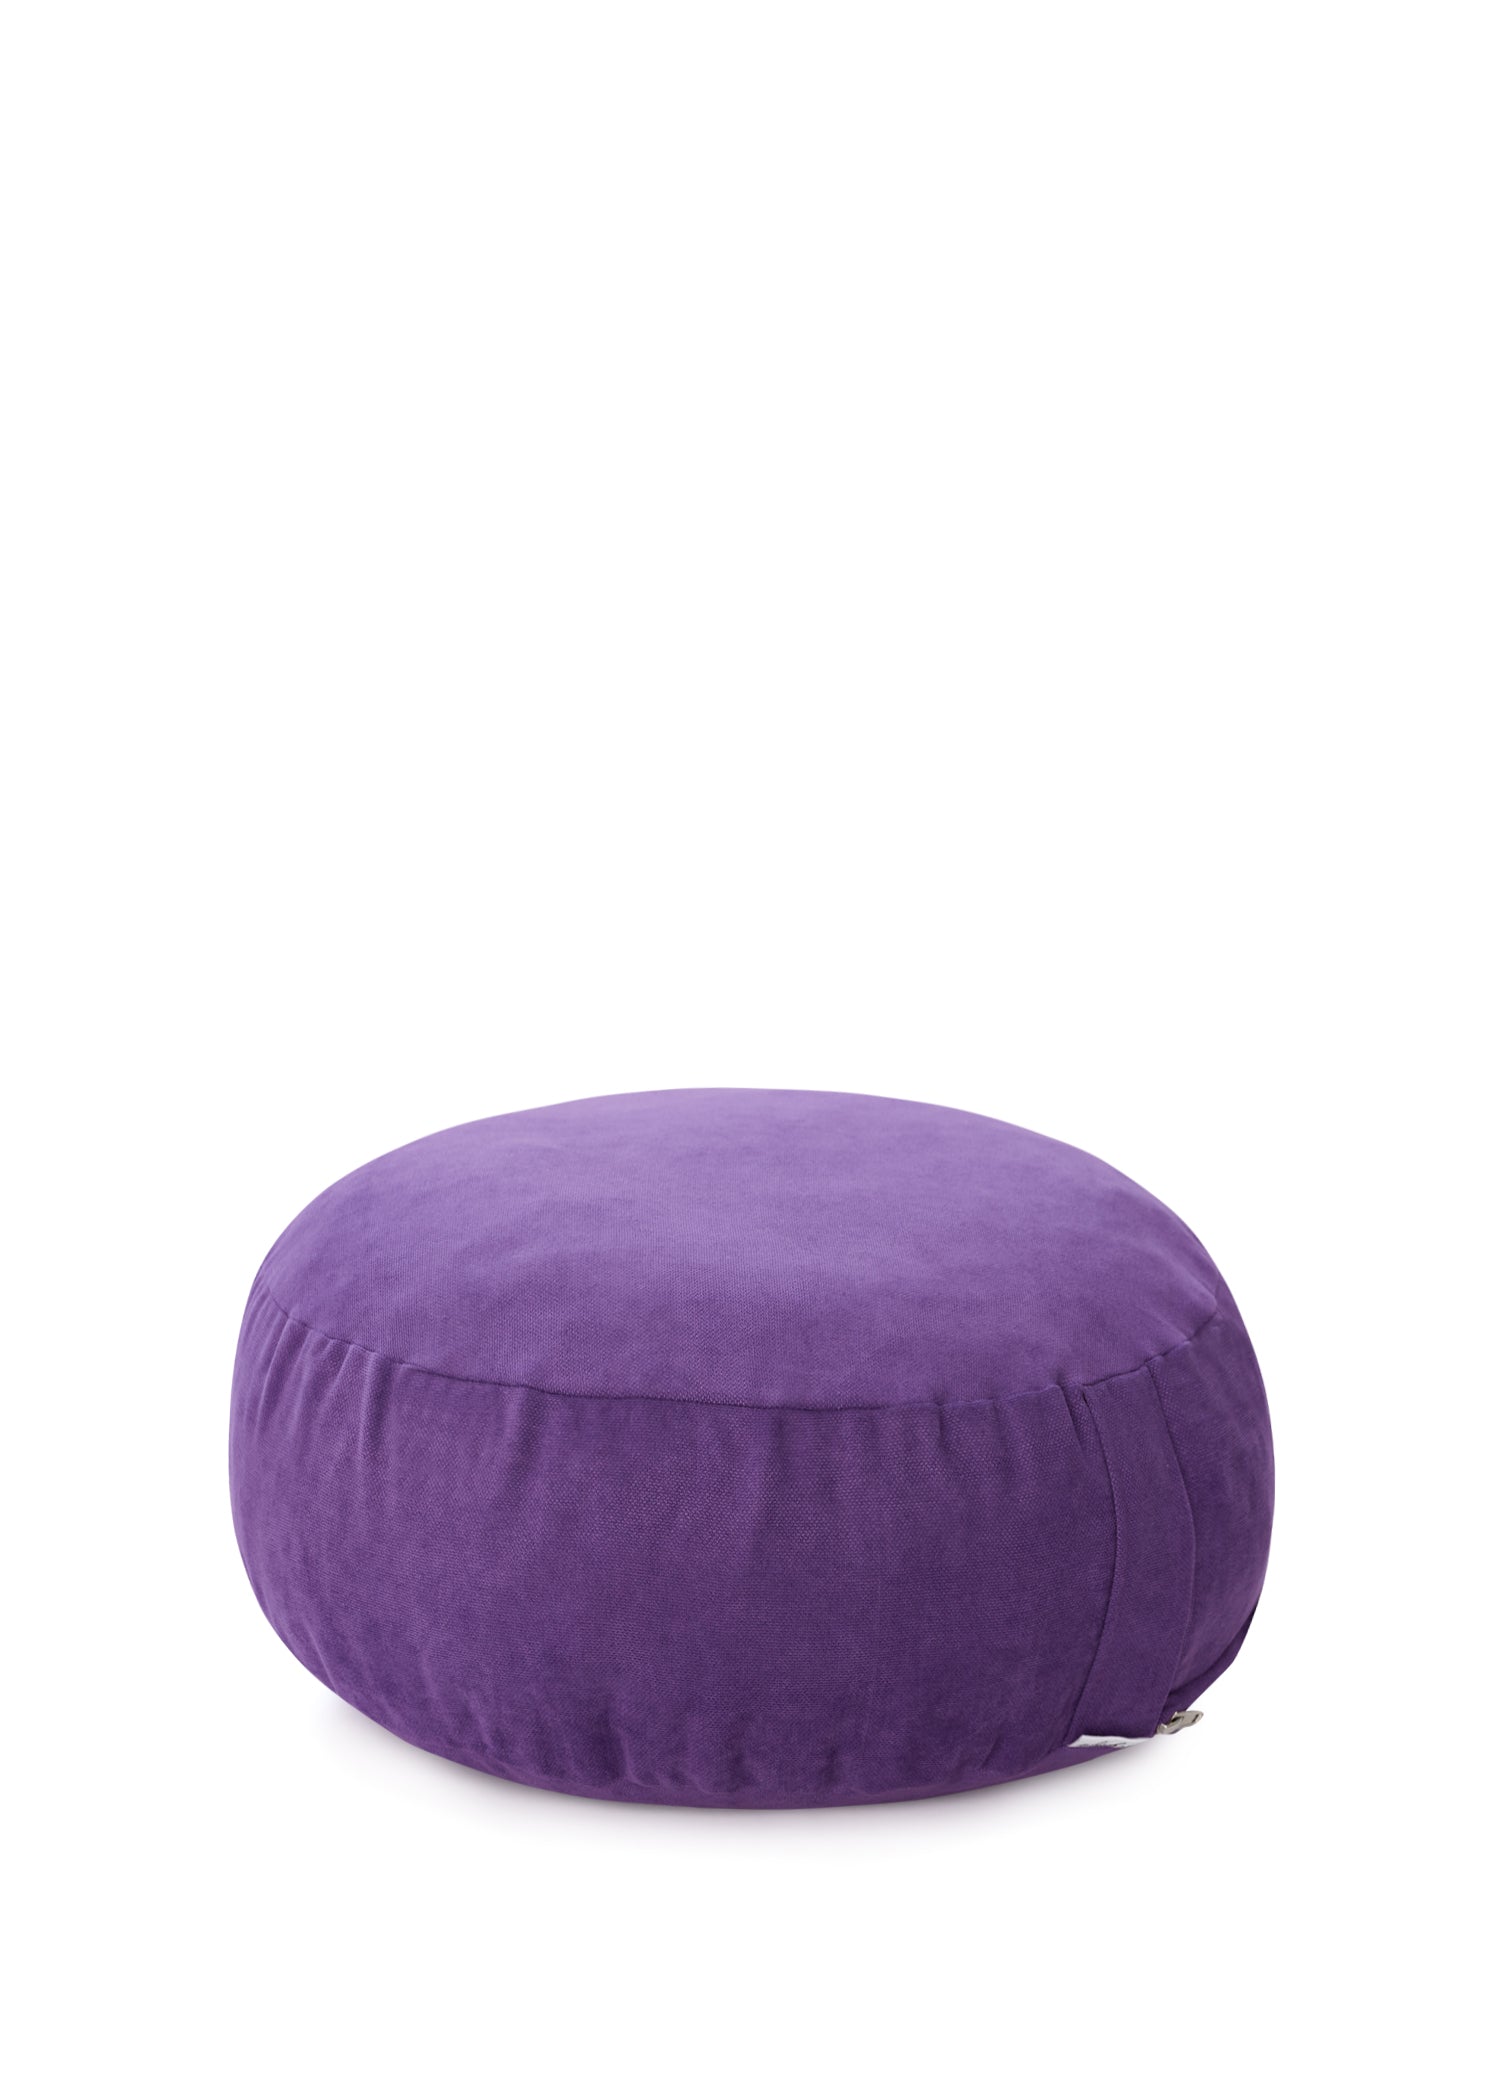 Purple Meditation Cushion 40 Cm Diameter